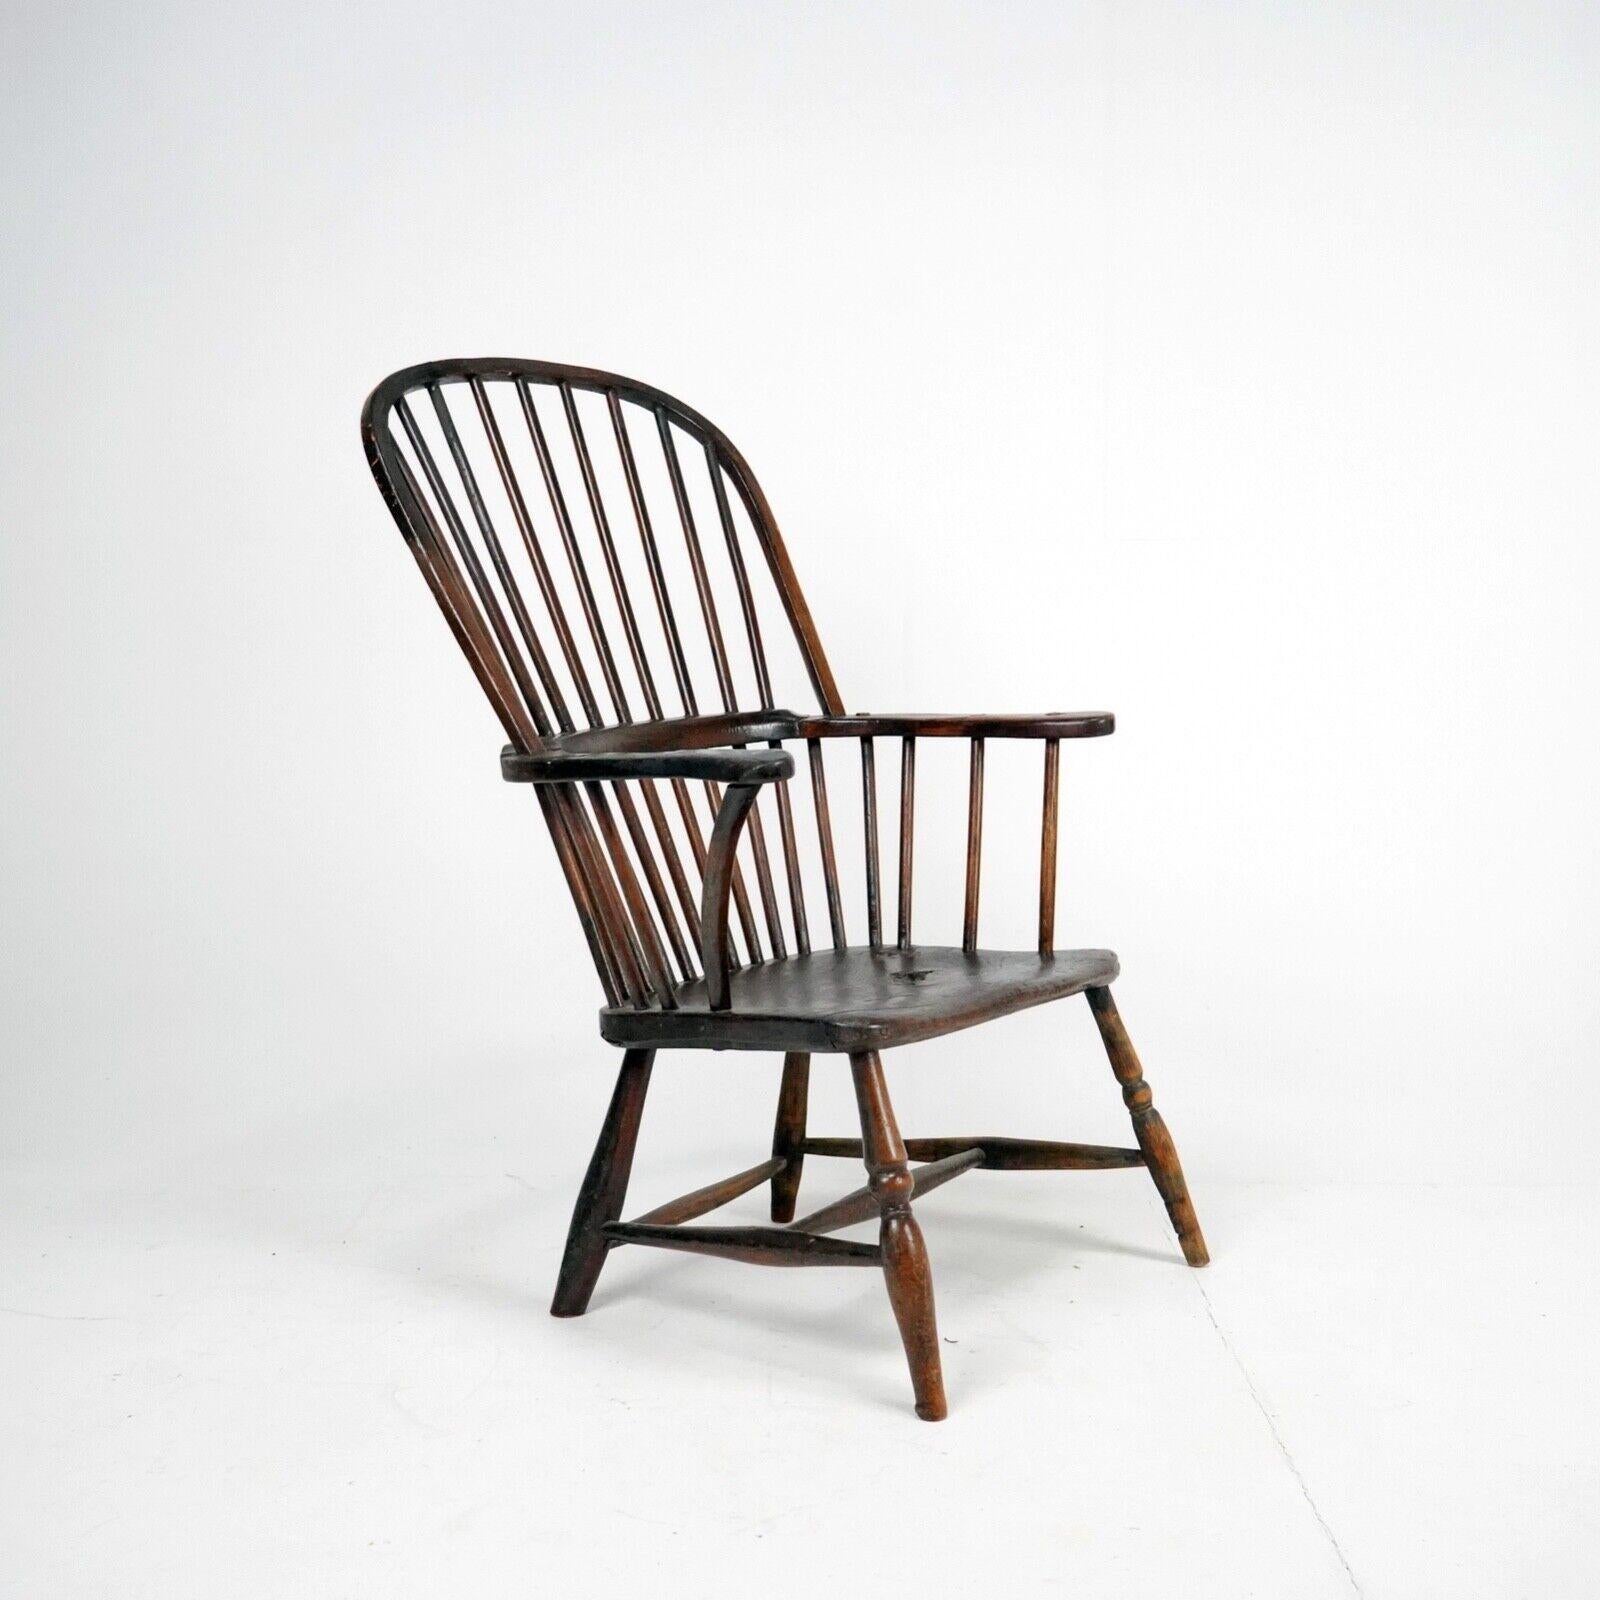 Late 18th Century English Hoop Back Windsor Chair 1